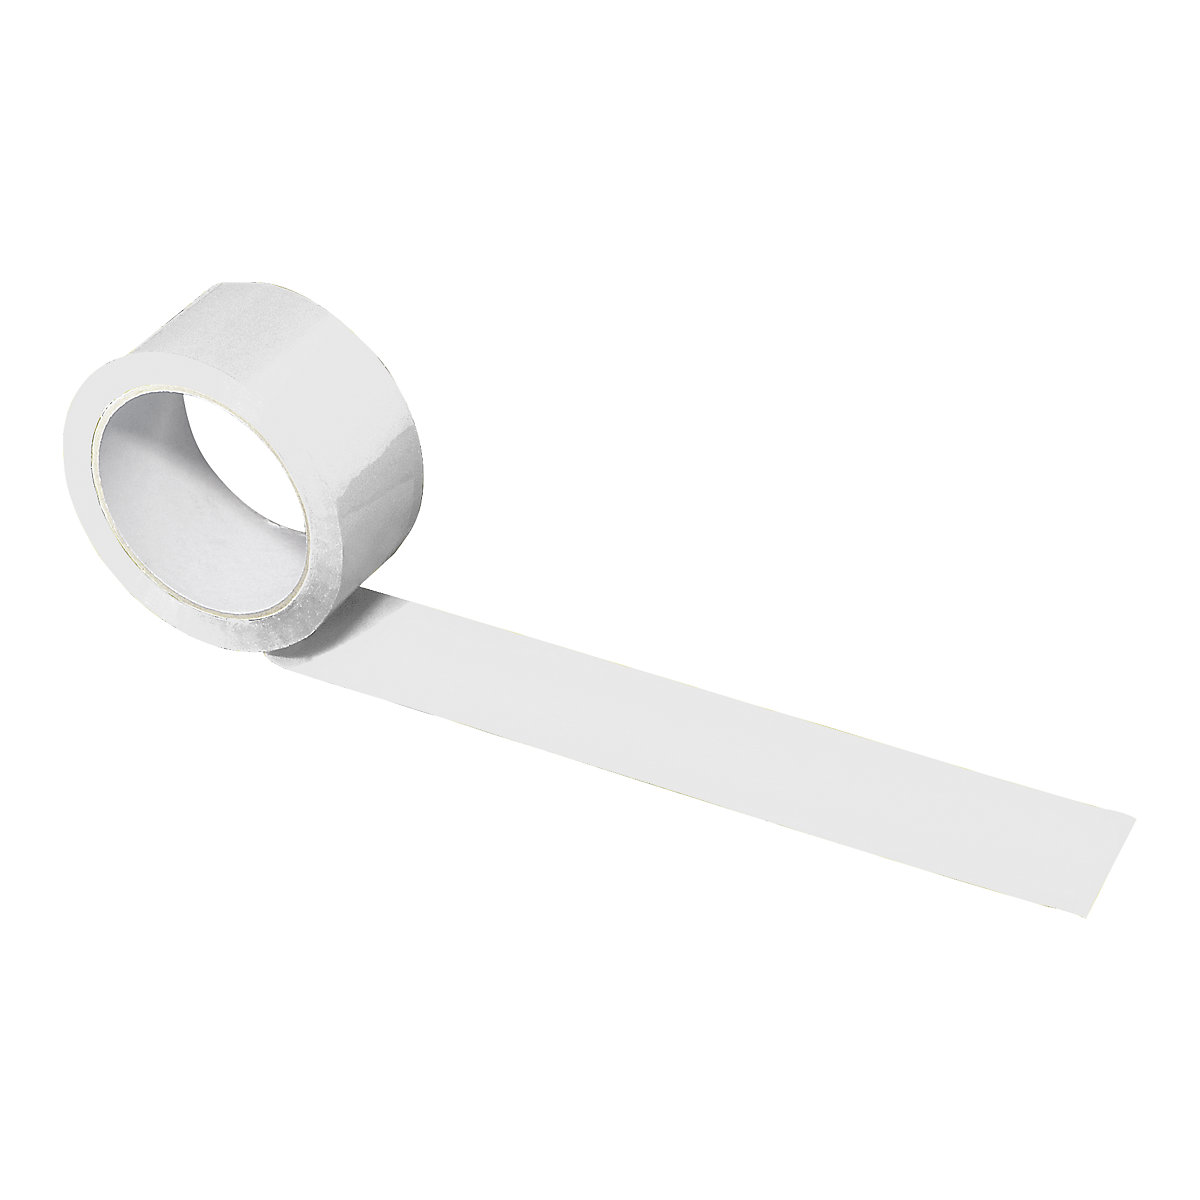 Balicí páska z PP, v různých barvách, bal.j. 108 rolí, bílá, šířka pásky 50 mm-1